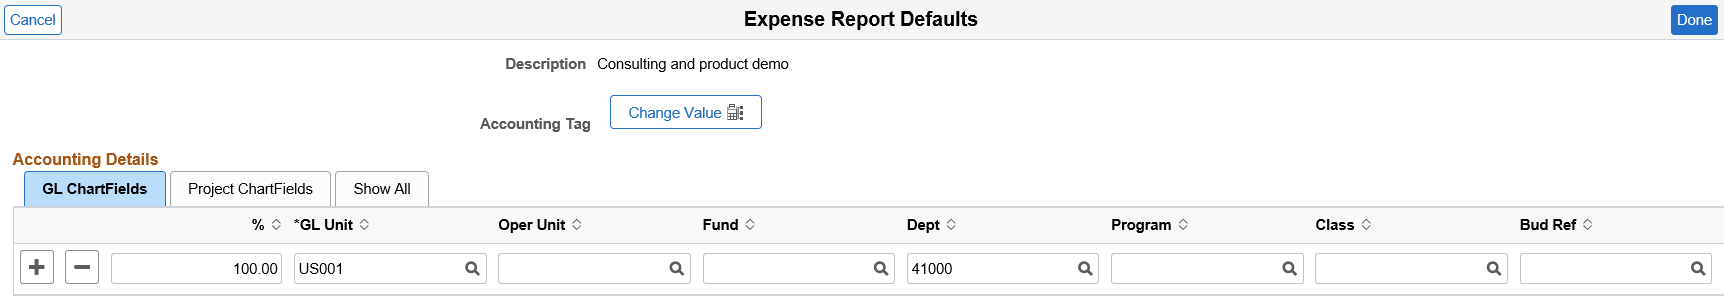 Expense Report Defaults